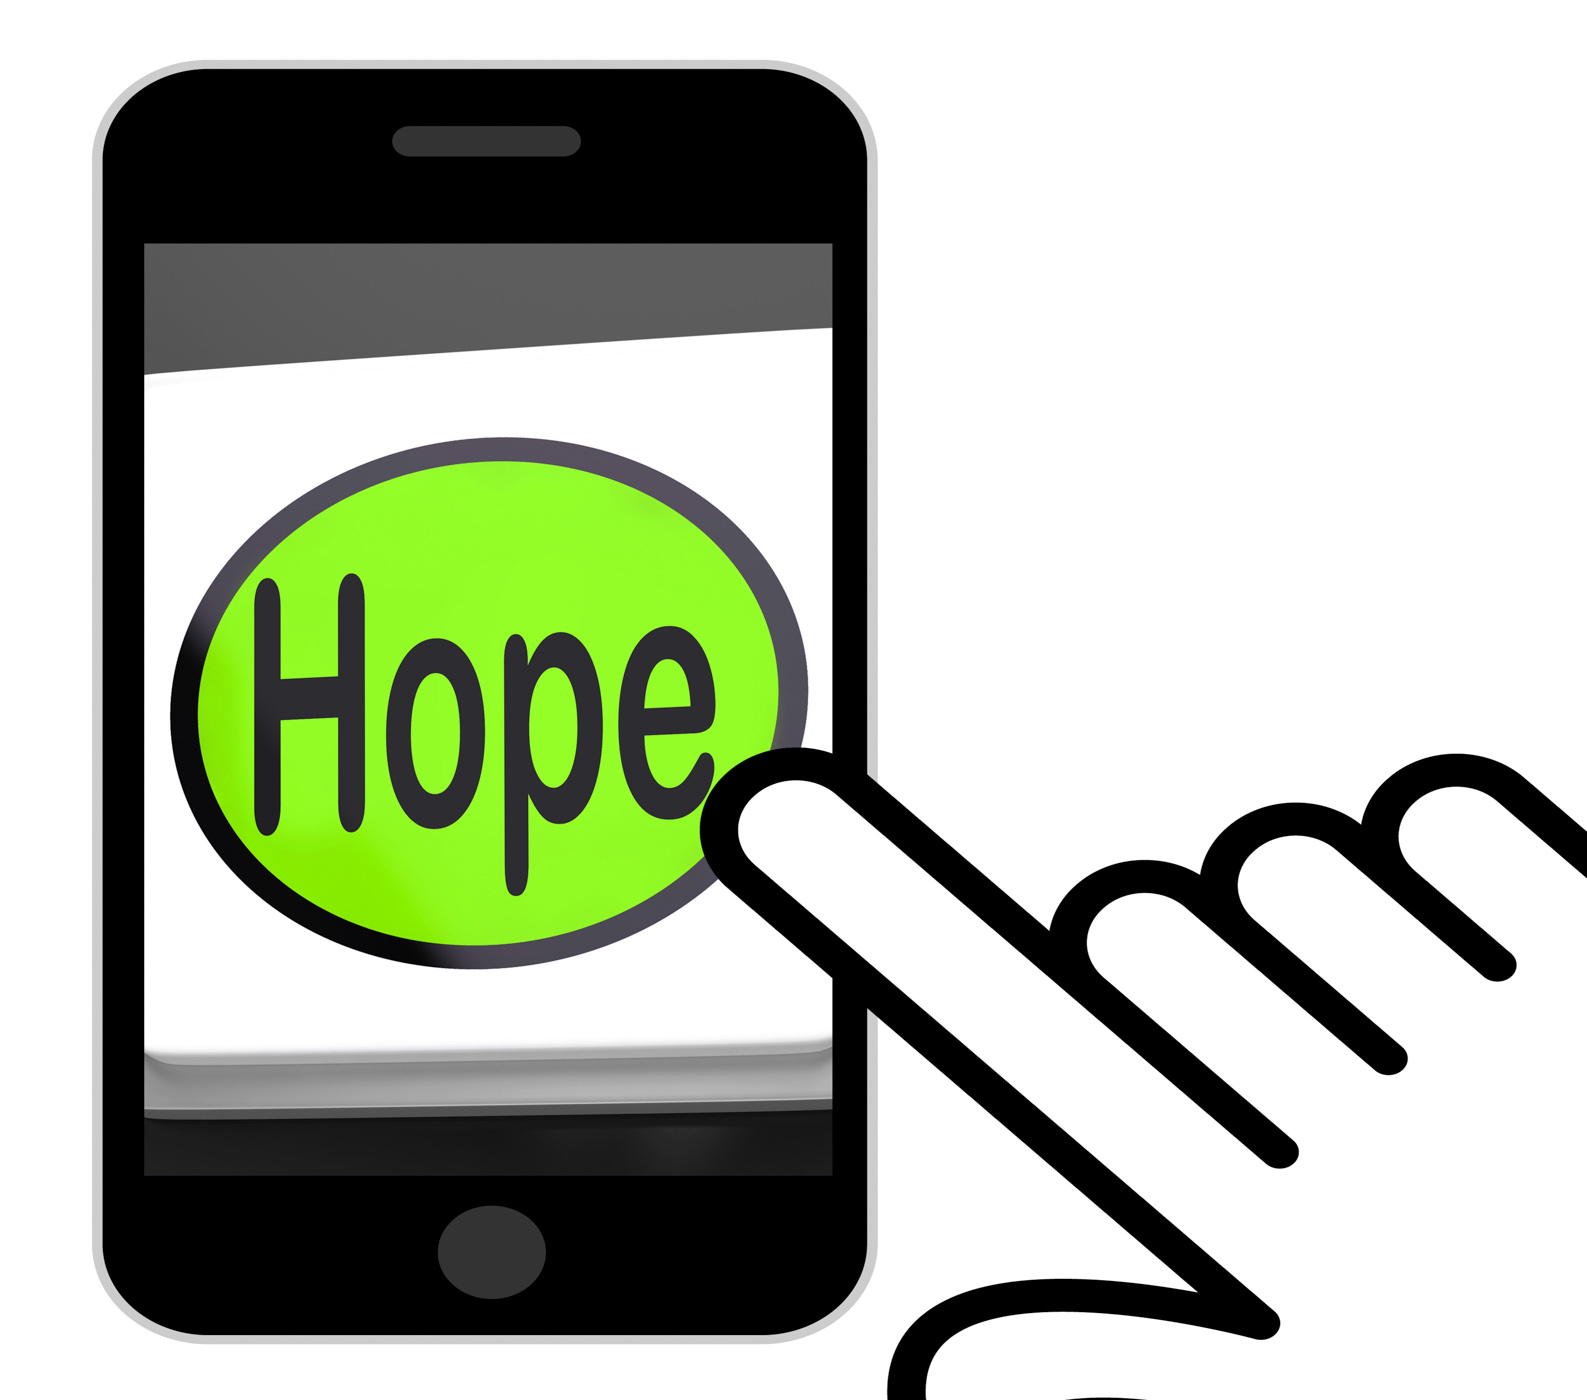 Hope button displays hoping hopeful wishing or wishful photo